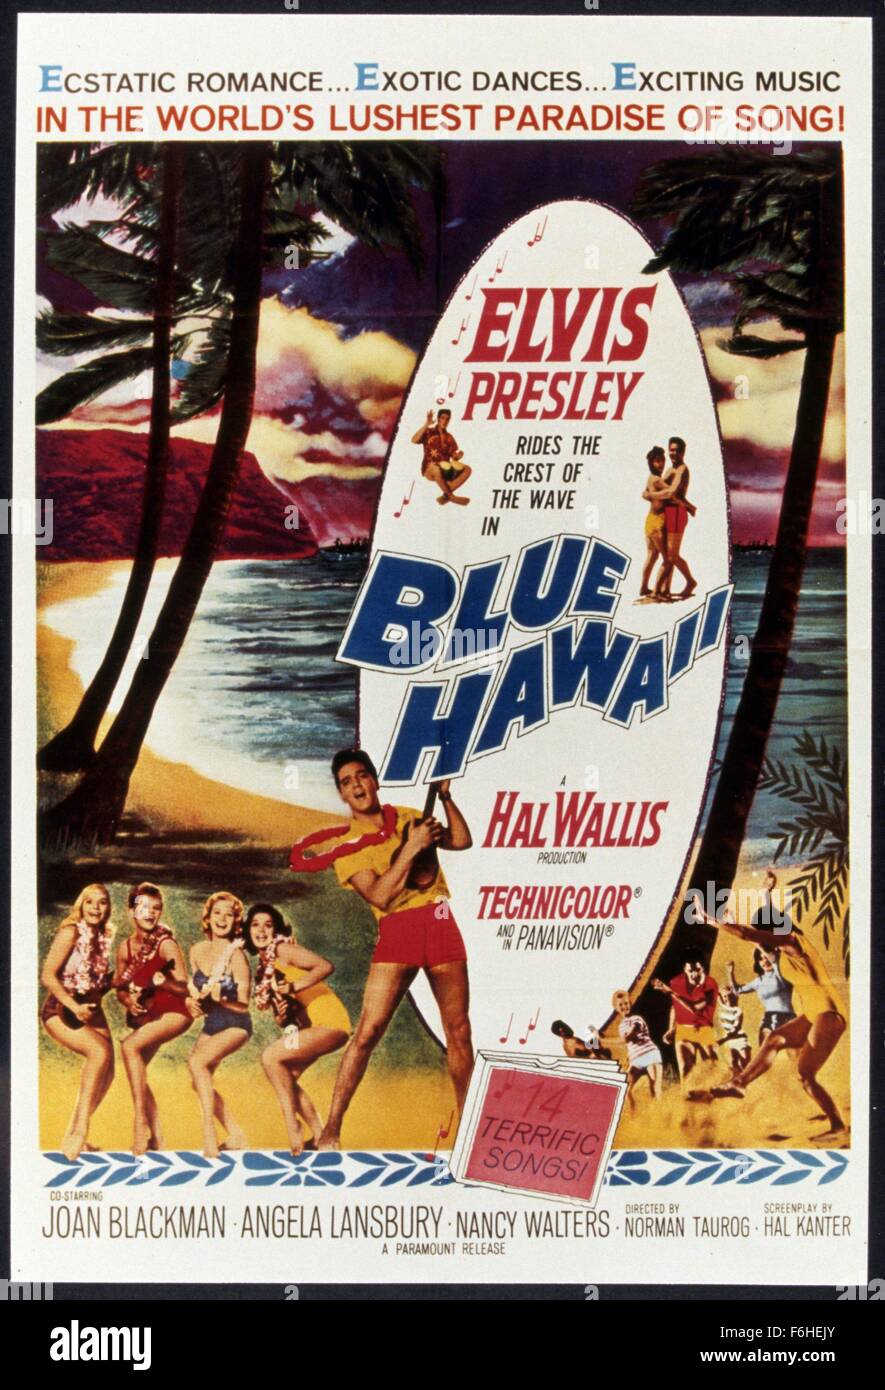 1961, Film Title: BLUE HAWAII, Director: NORMAN TAUROG, Studio: PARAMOUNT, Pictured: ELVIS PRESLEY, NORMAN TAUROG. (Credit Image: SNAP) Stock Photo